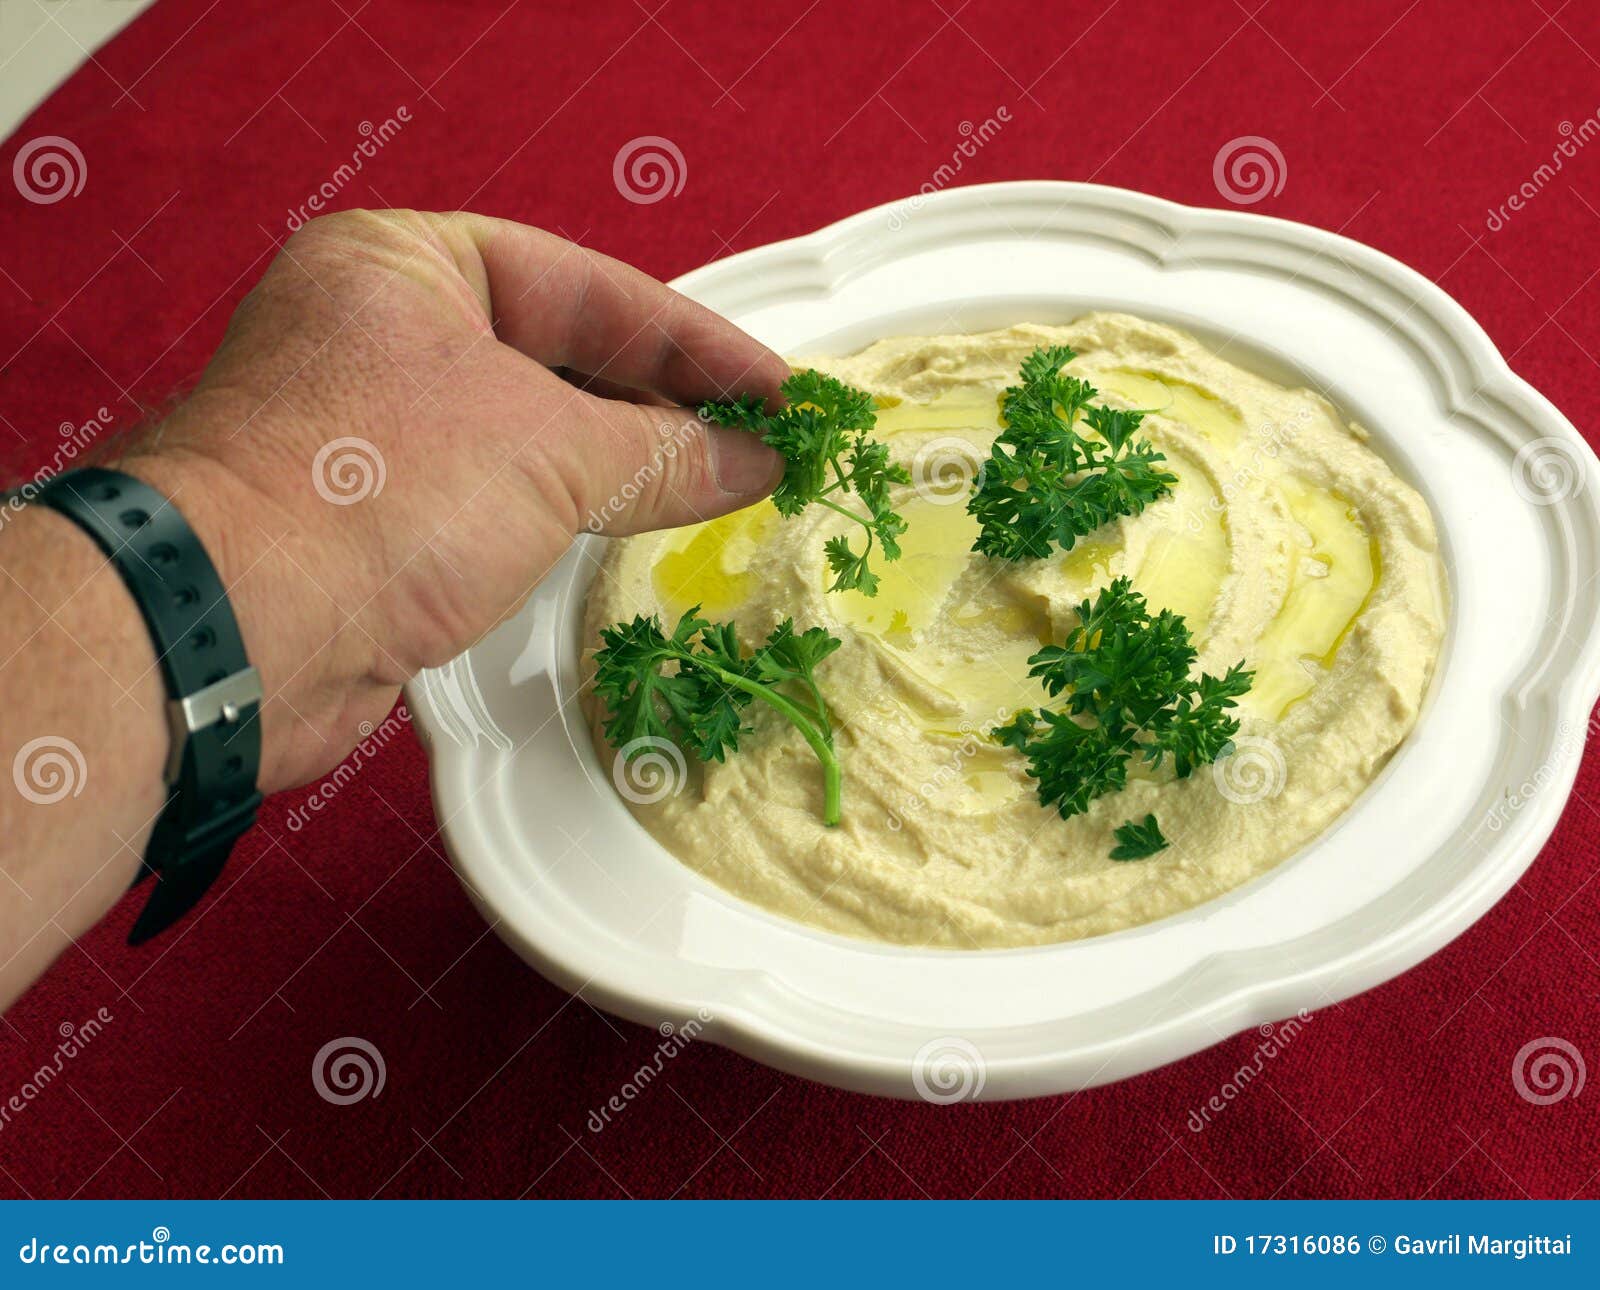 humus salad with olive oil